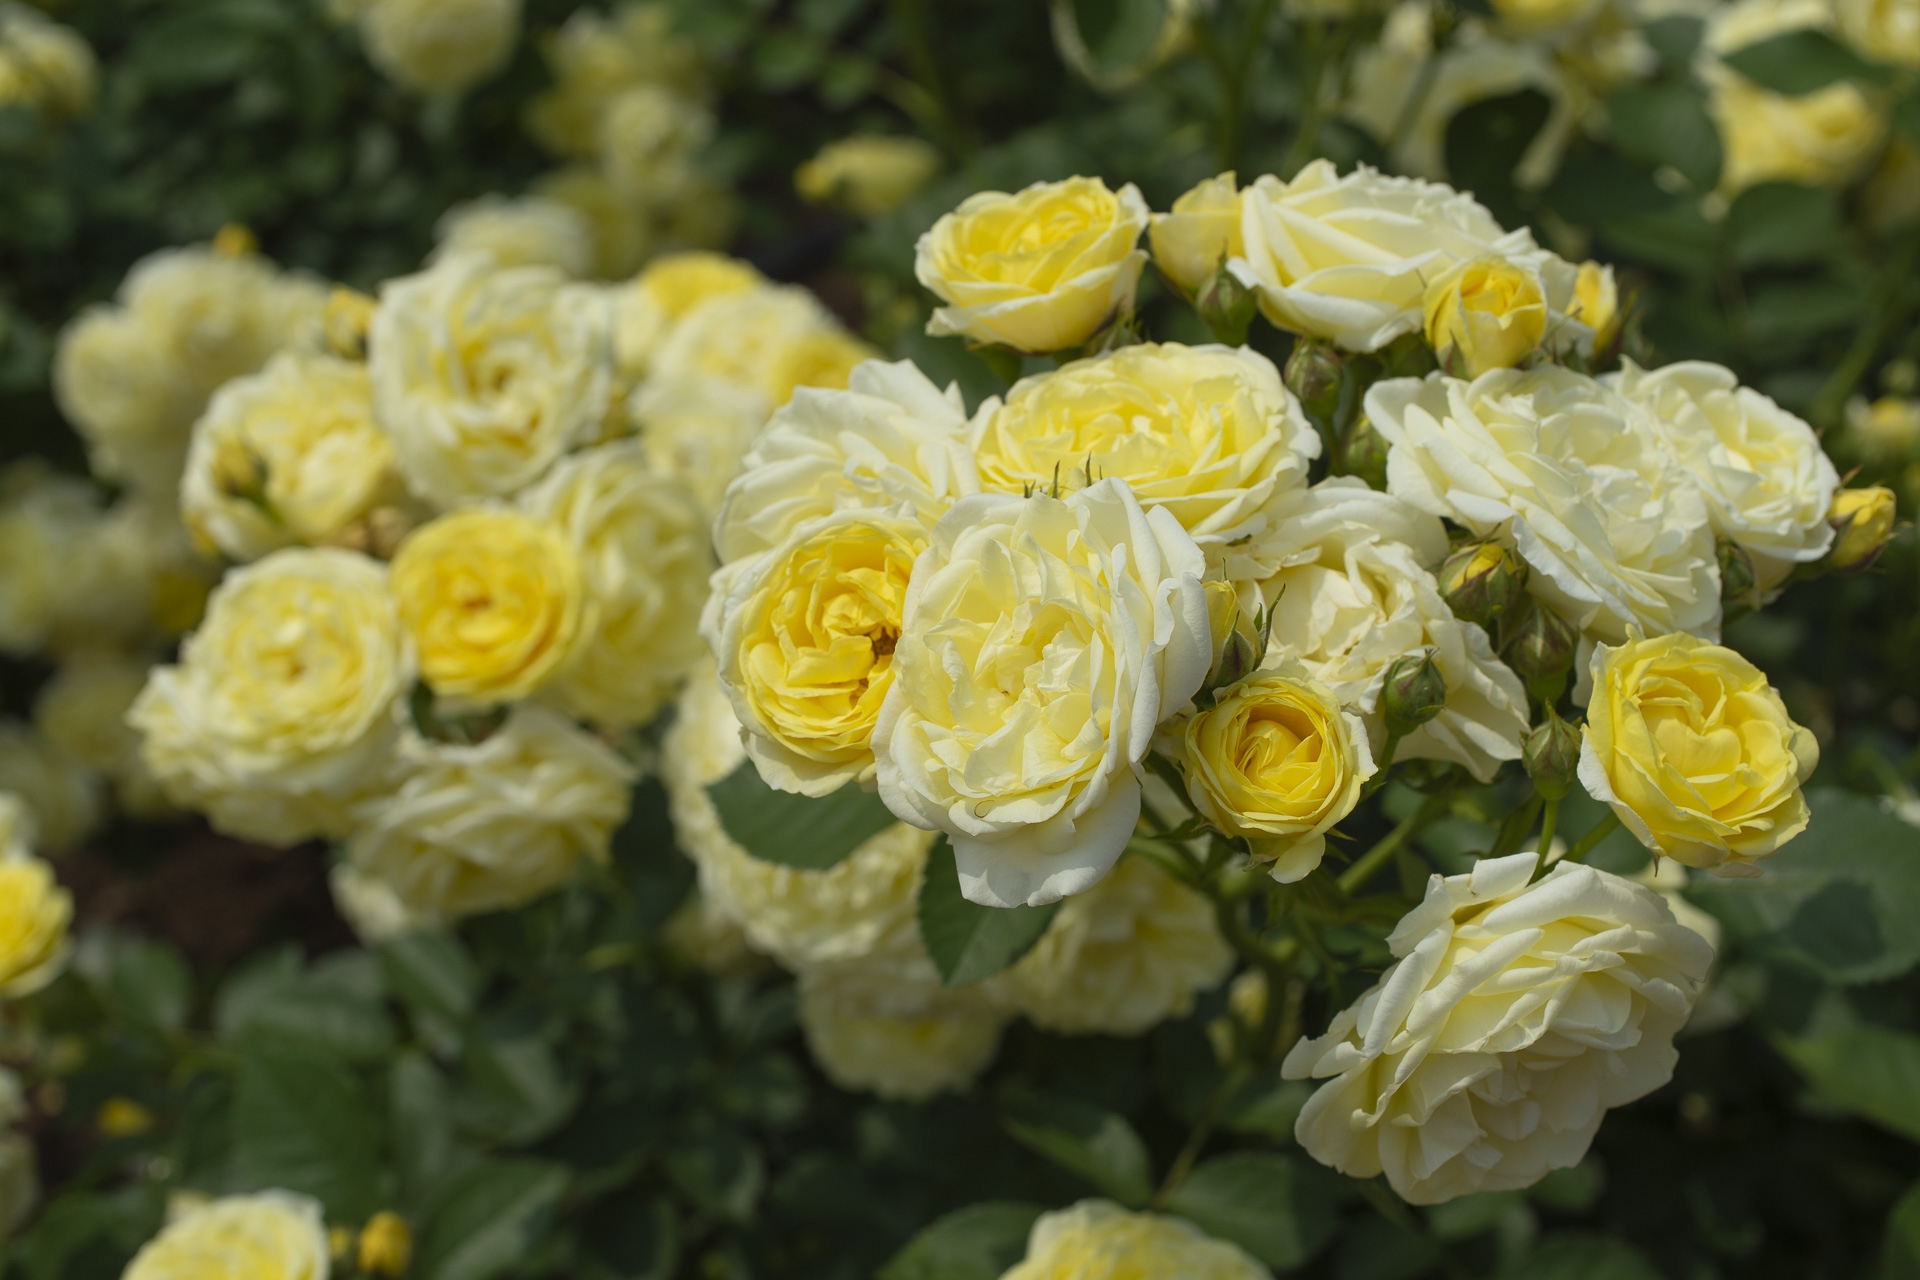 Beautiful shrub with yellow roses